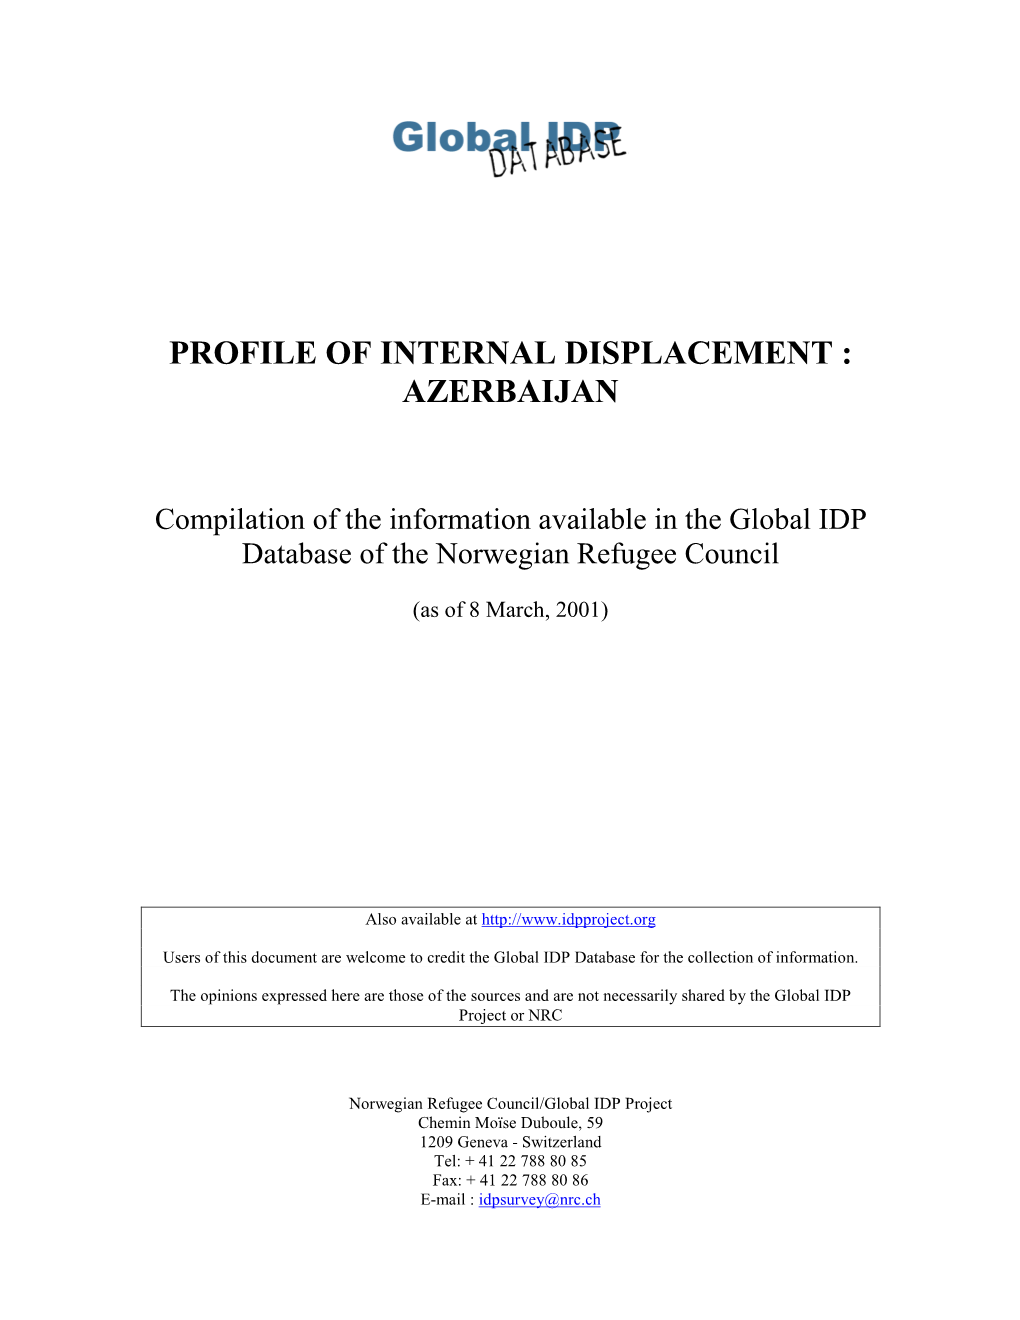 Profile of Internal Displacement : Azerbaijan